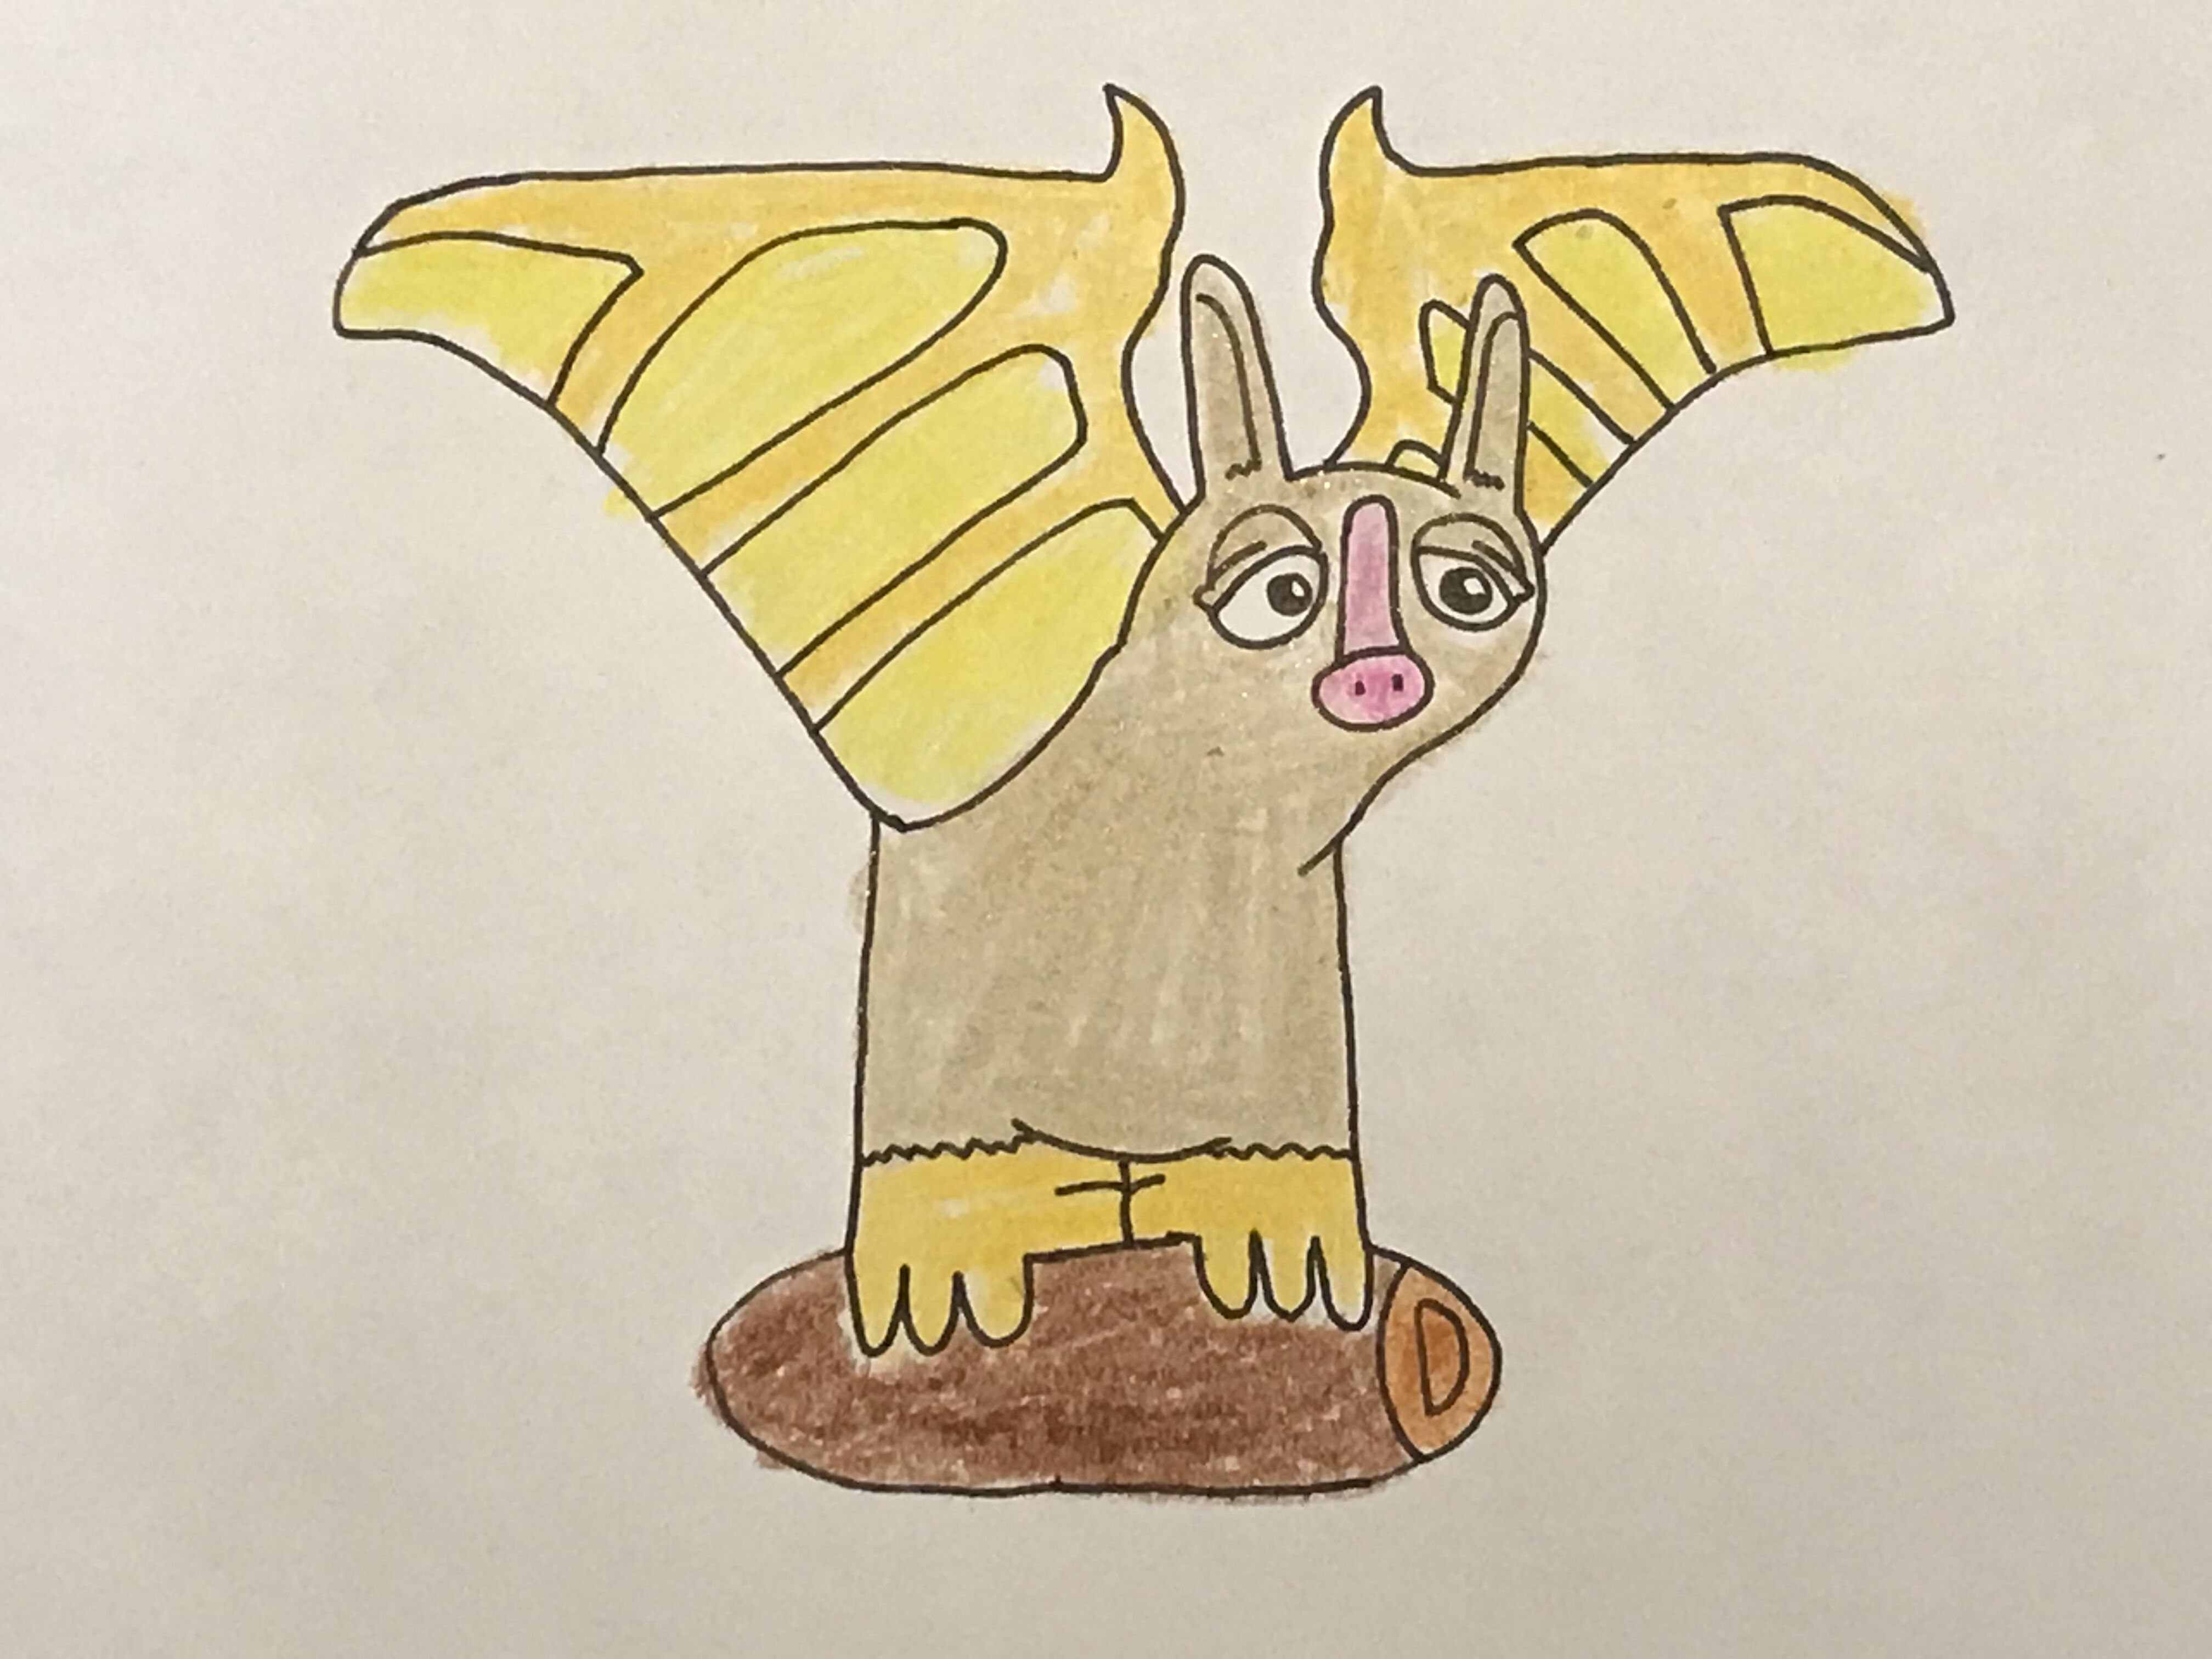 yellow winged bat